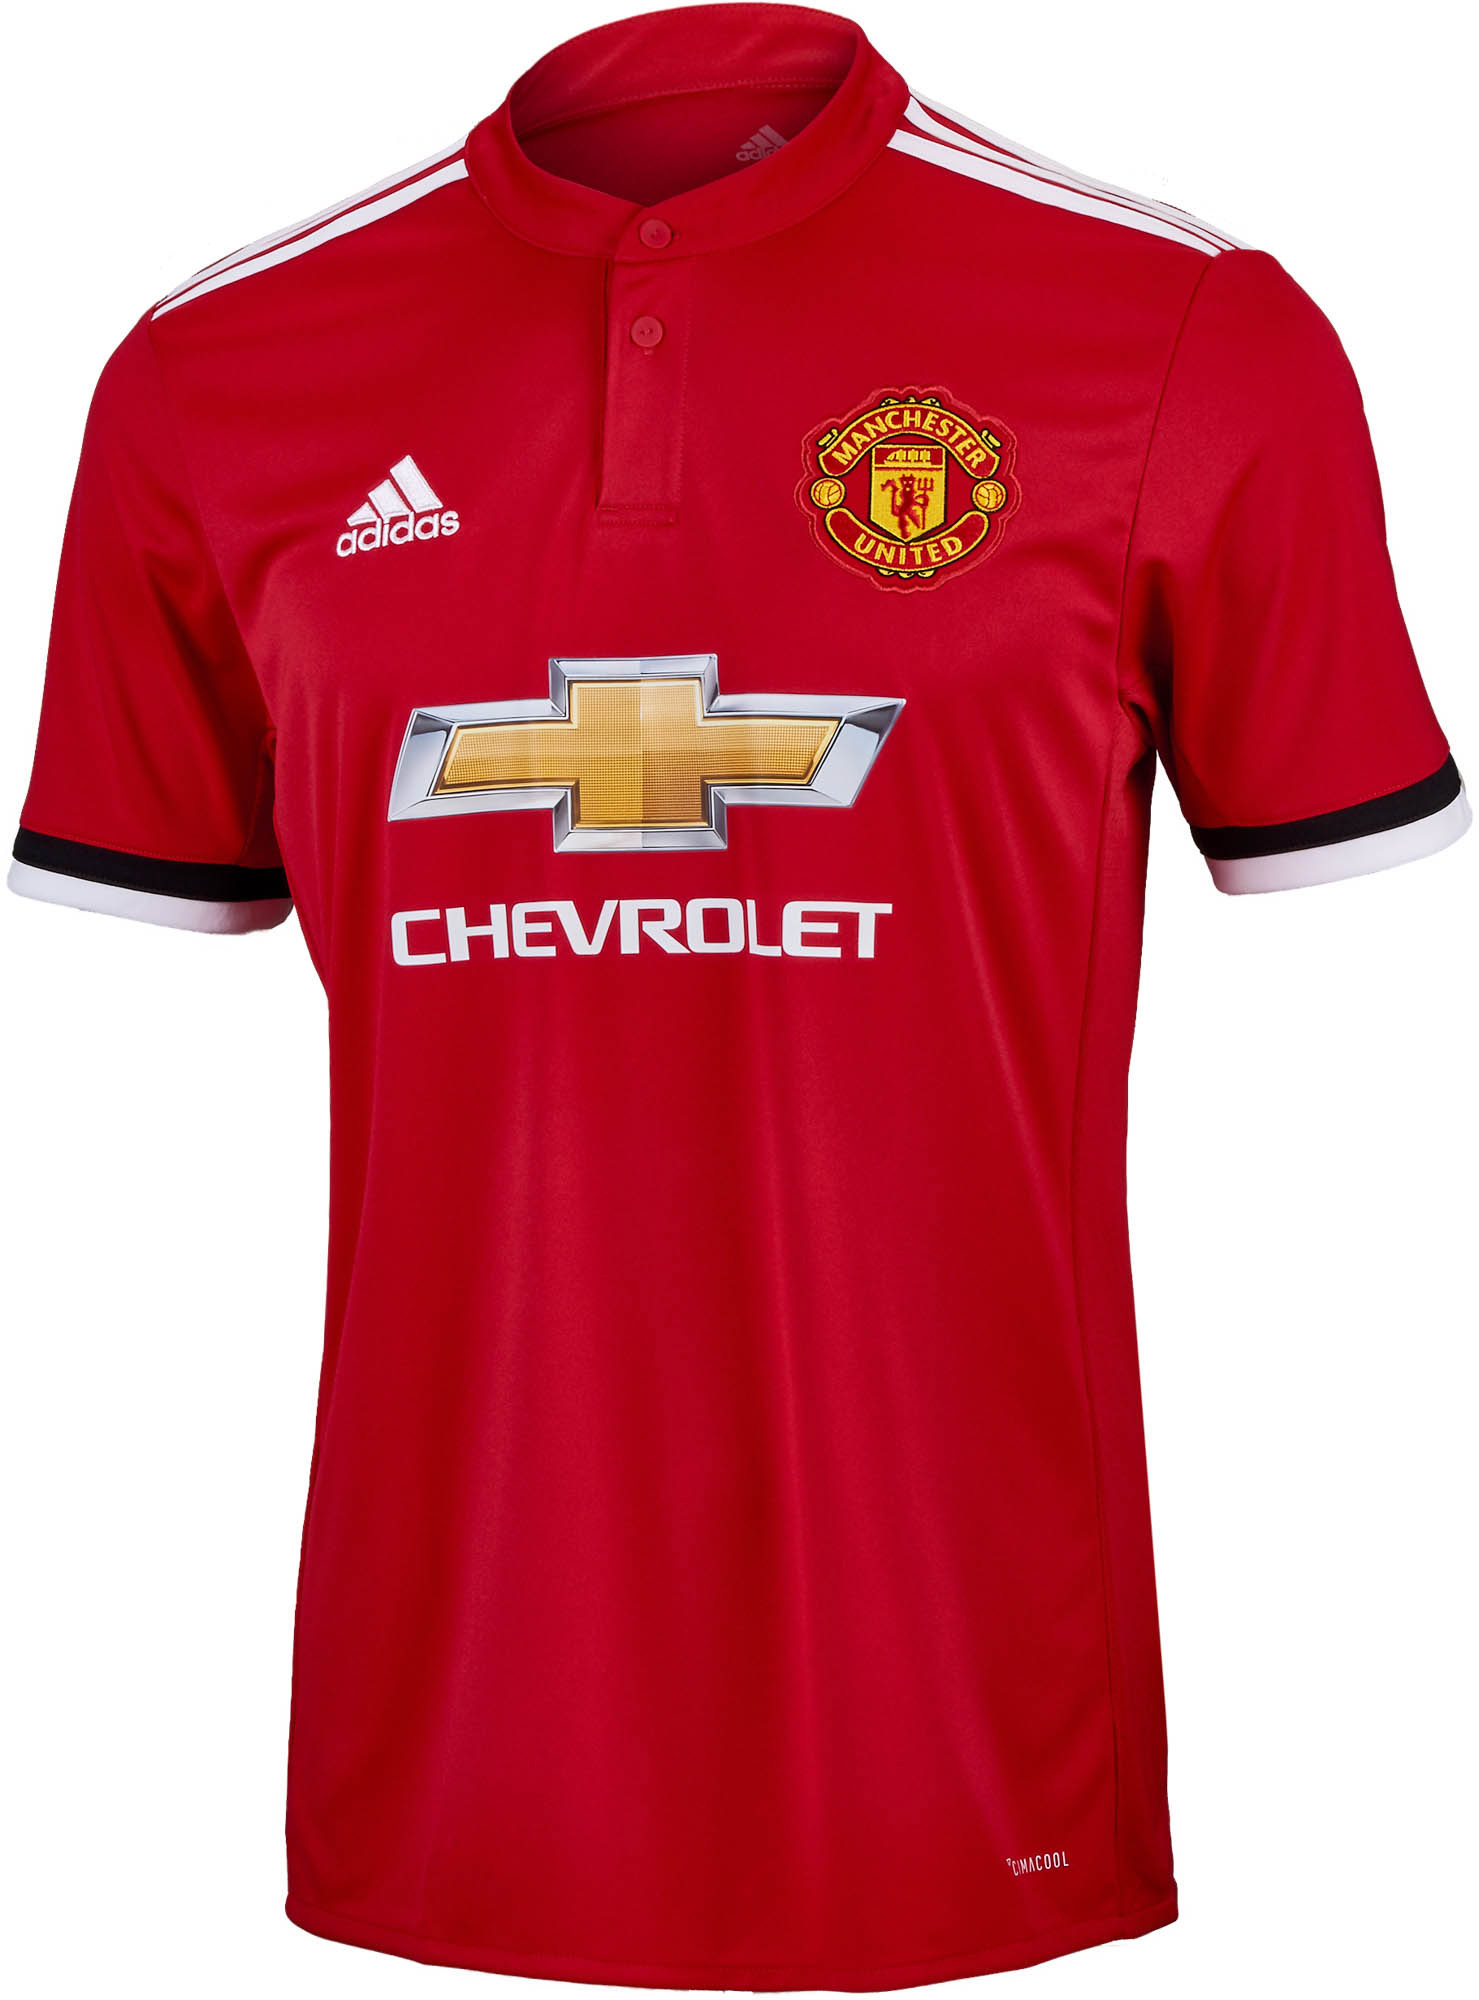 adidas Manchester United Jersey - 17/18 Man Utd Jerseys